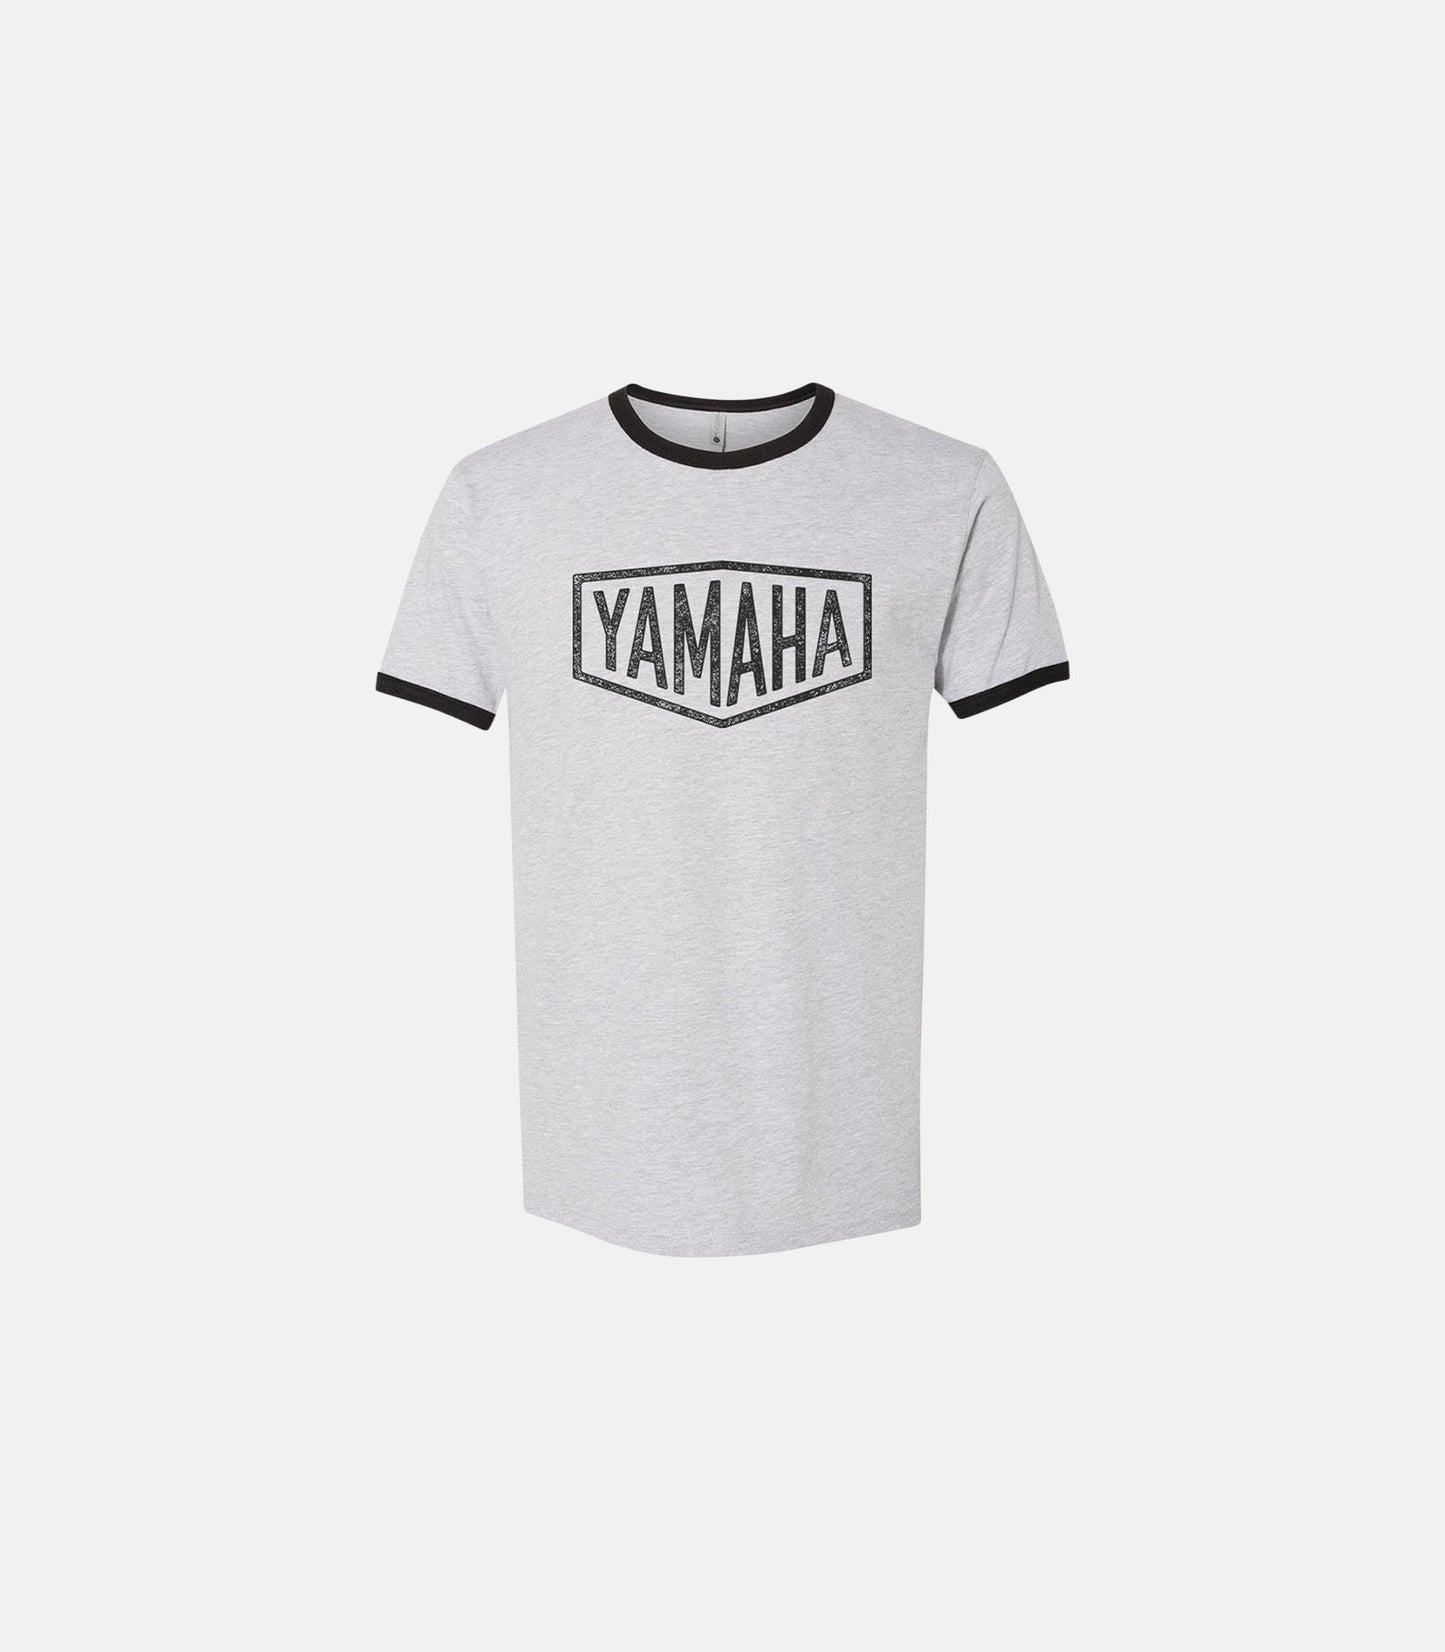 YAMAHA APPAREL Yamaha Vintage Raglan T-Shirt - Gray/Black